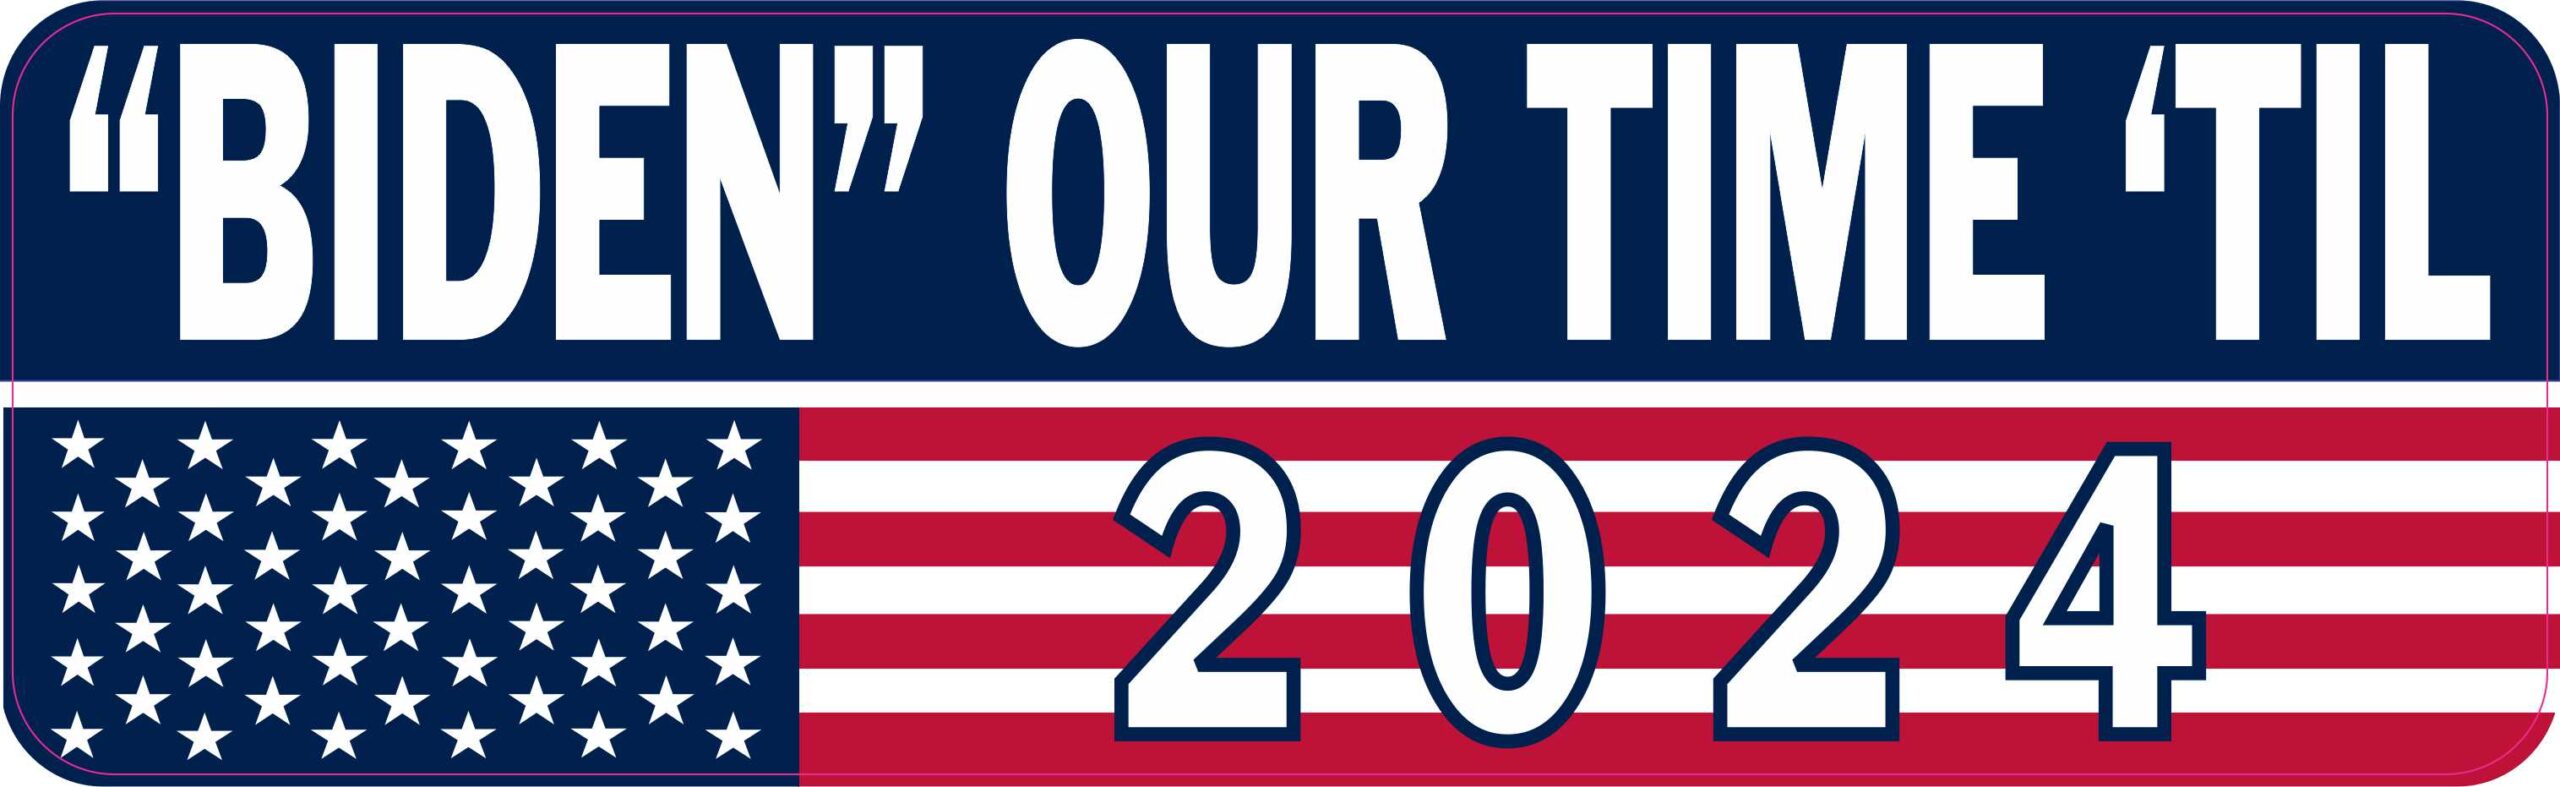 10in x 3in American Flag Biden Our Time Til 2024 Vinyl Sticker Car